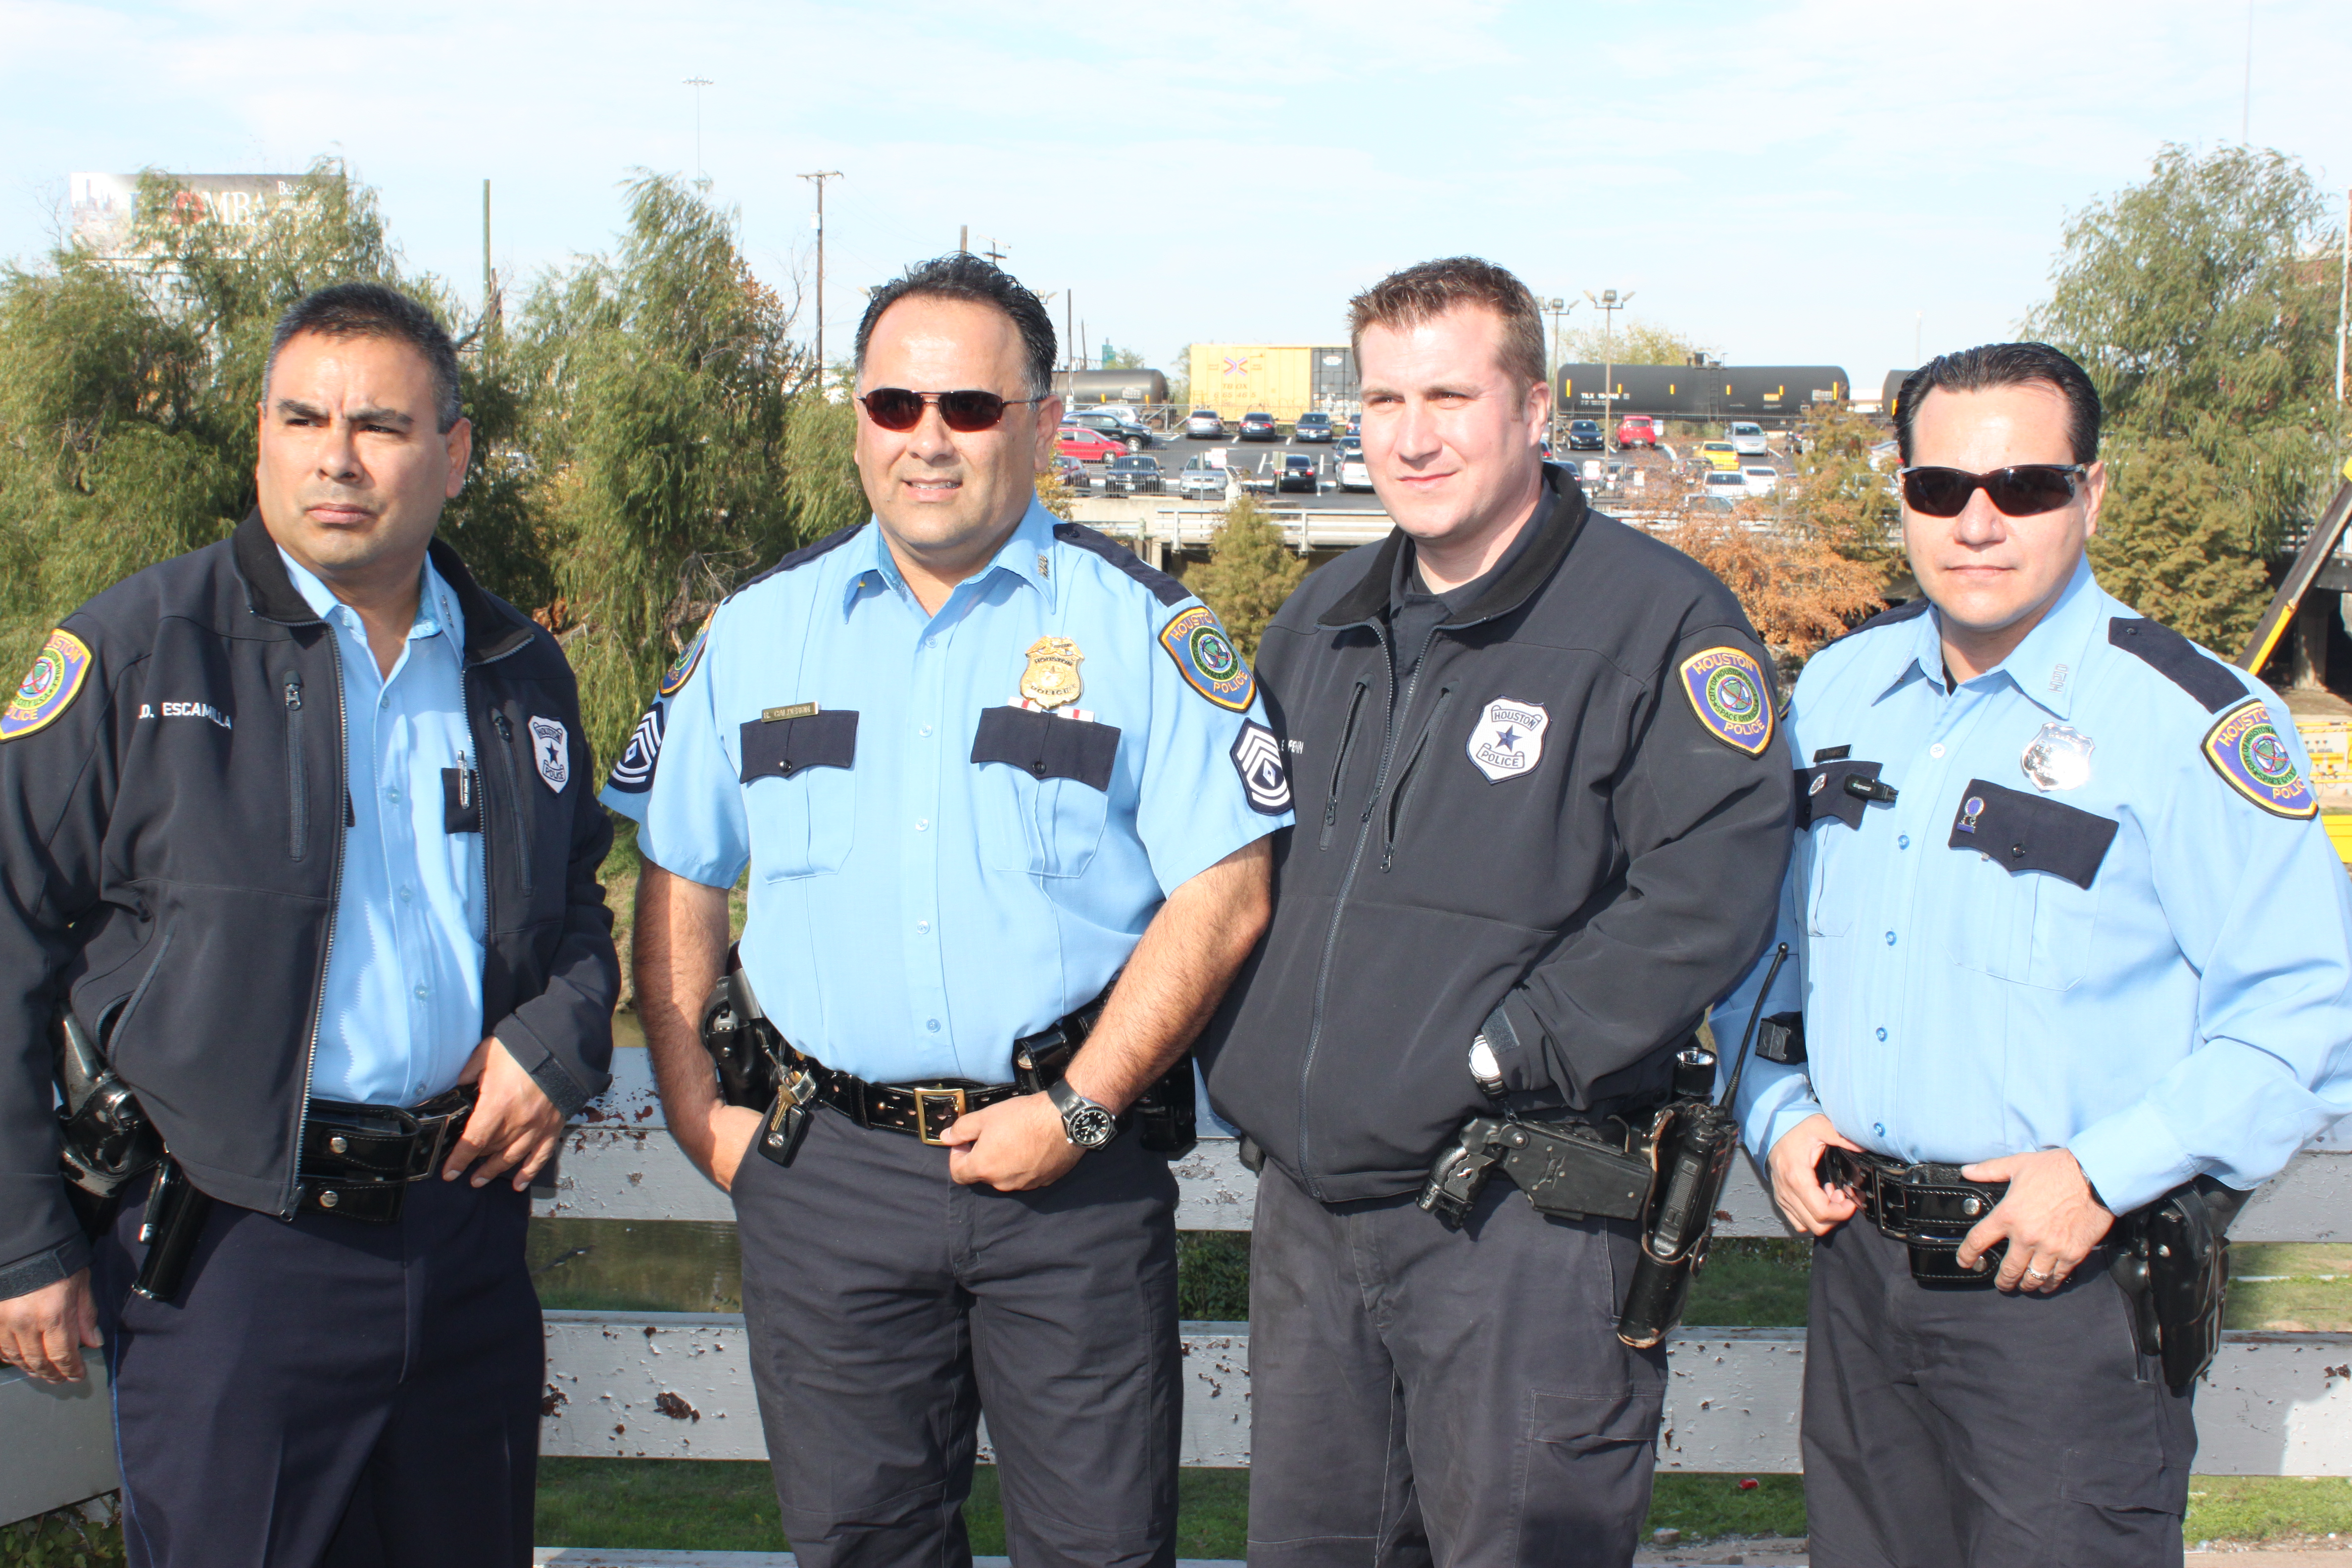 HPD Officer B. Escamilla, Sgt. R. Calderon, Officer J. Penn and Officer R. Ramirez